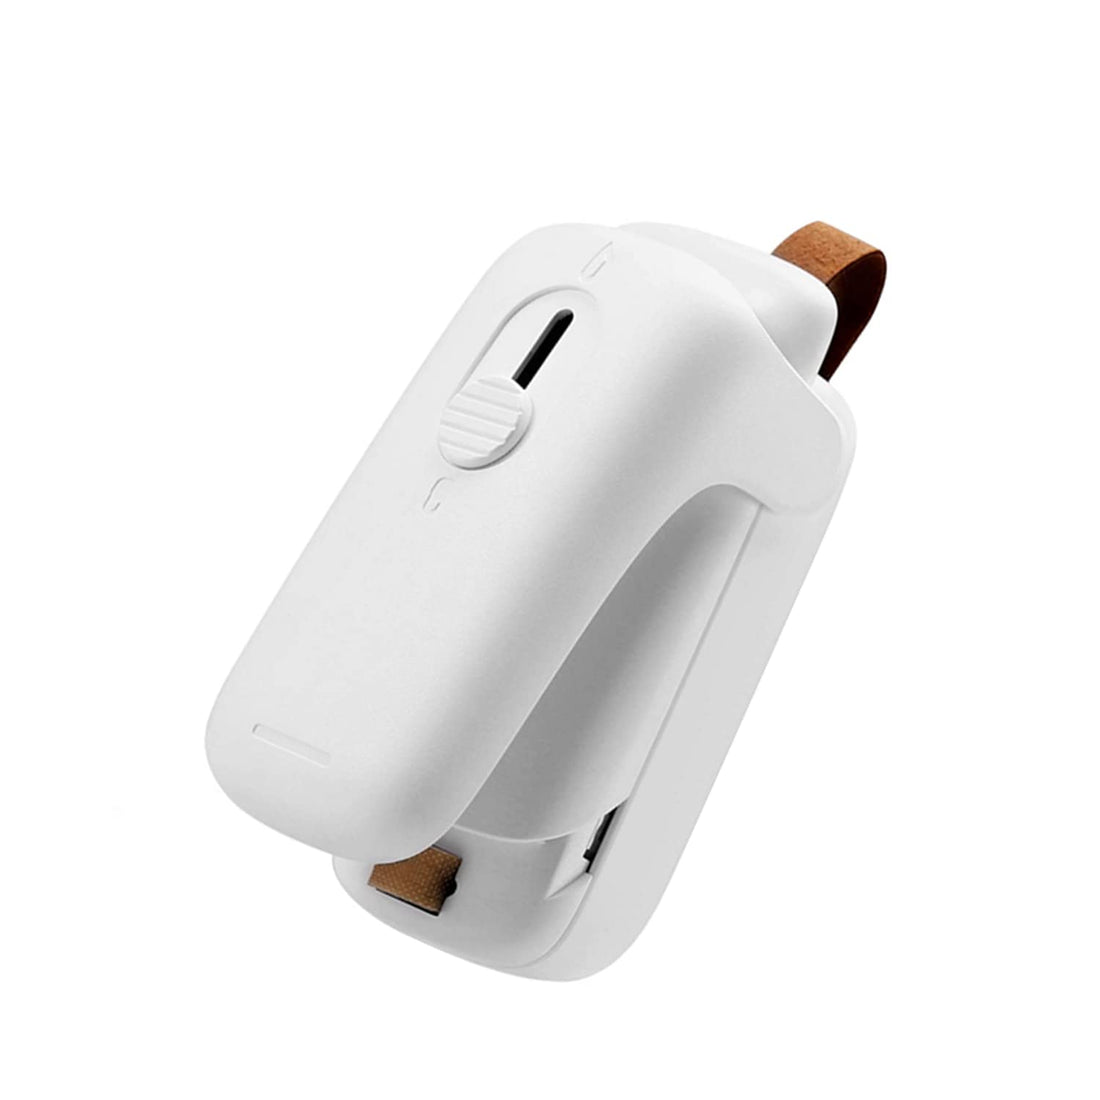 Mini Bag Sealer | Lerkumey Handheld Bag Heat Vacuum Sealer | 2 IN 1 Heat Sealer and Cutter | Food Protector | Portable Chip Bag sealer Machine for Snack Cookies Plastic bags | Batteries-Included(White)